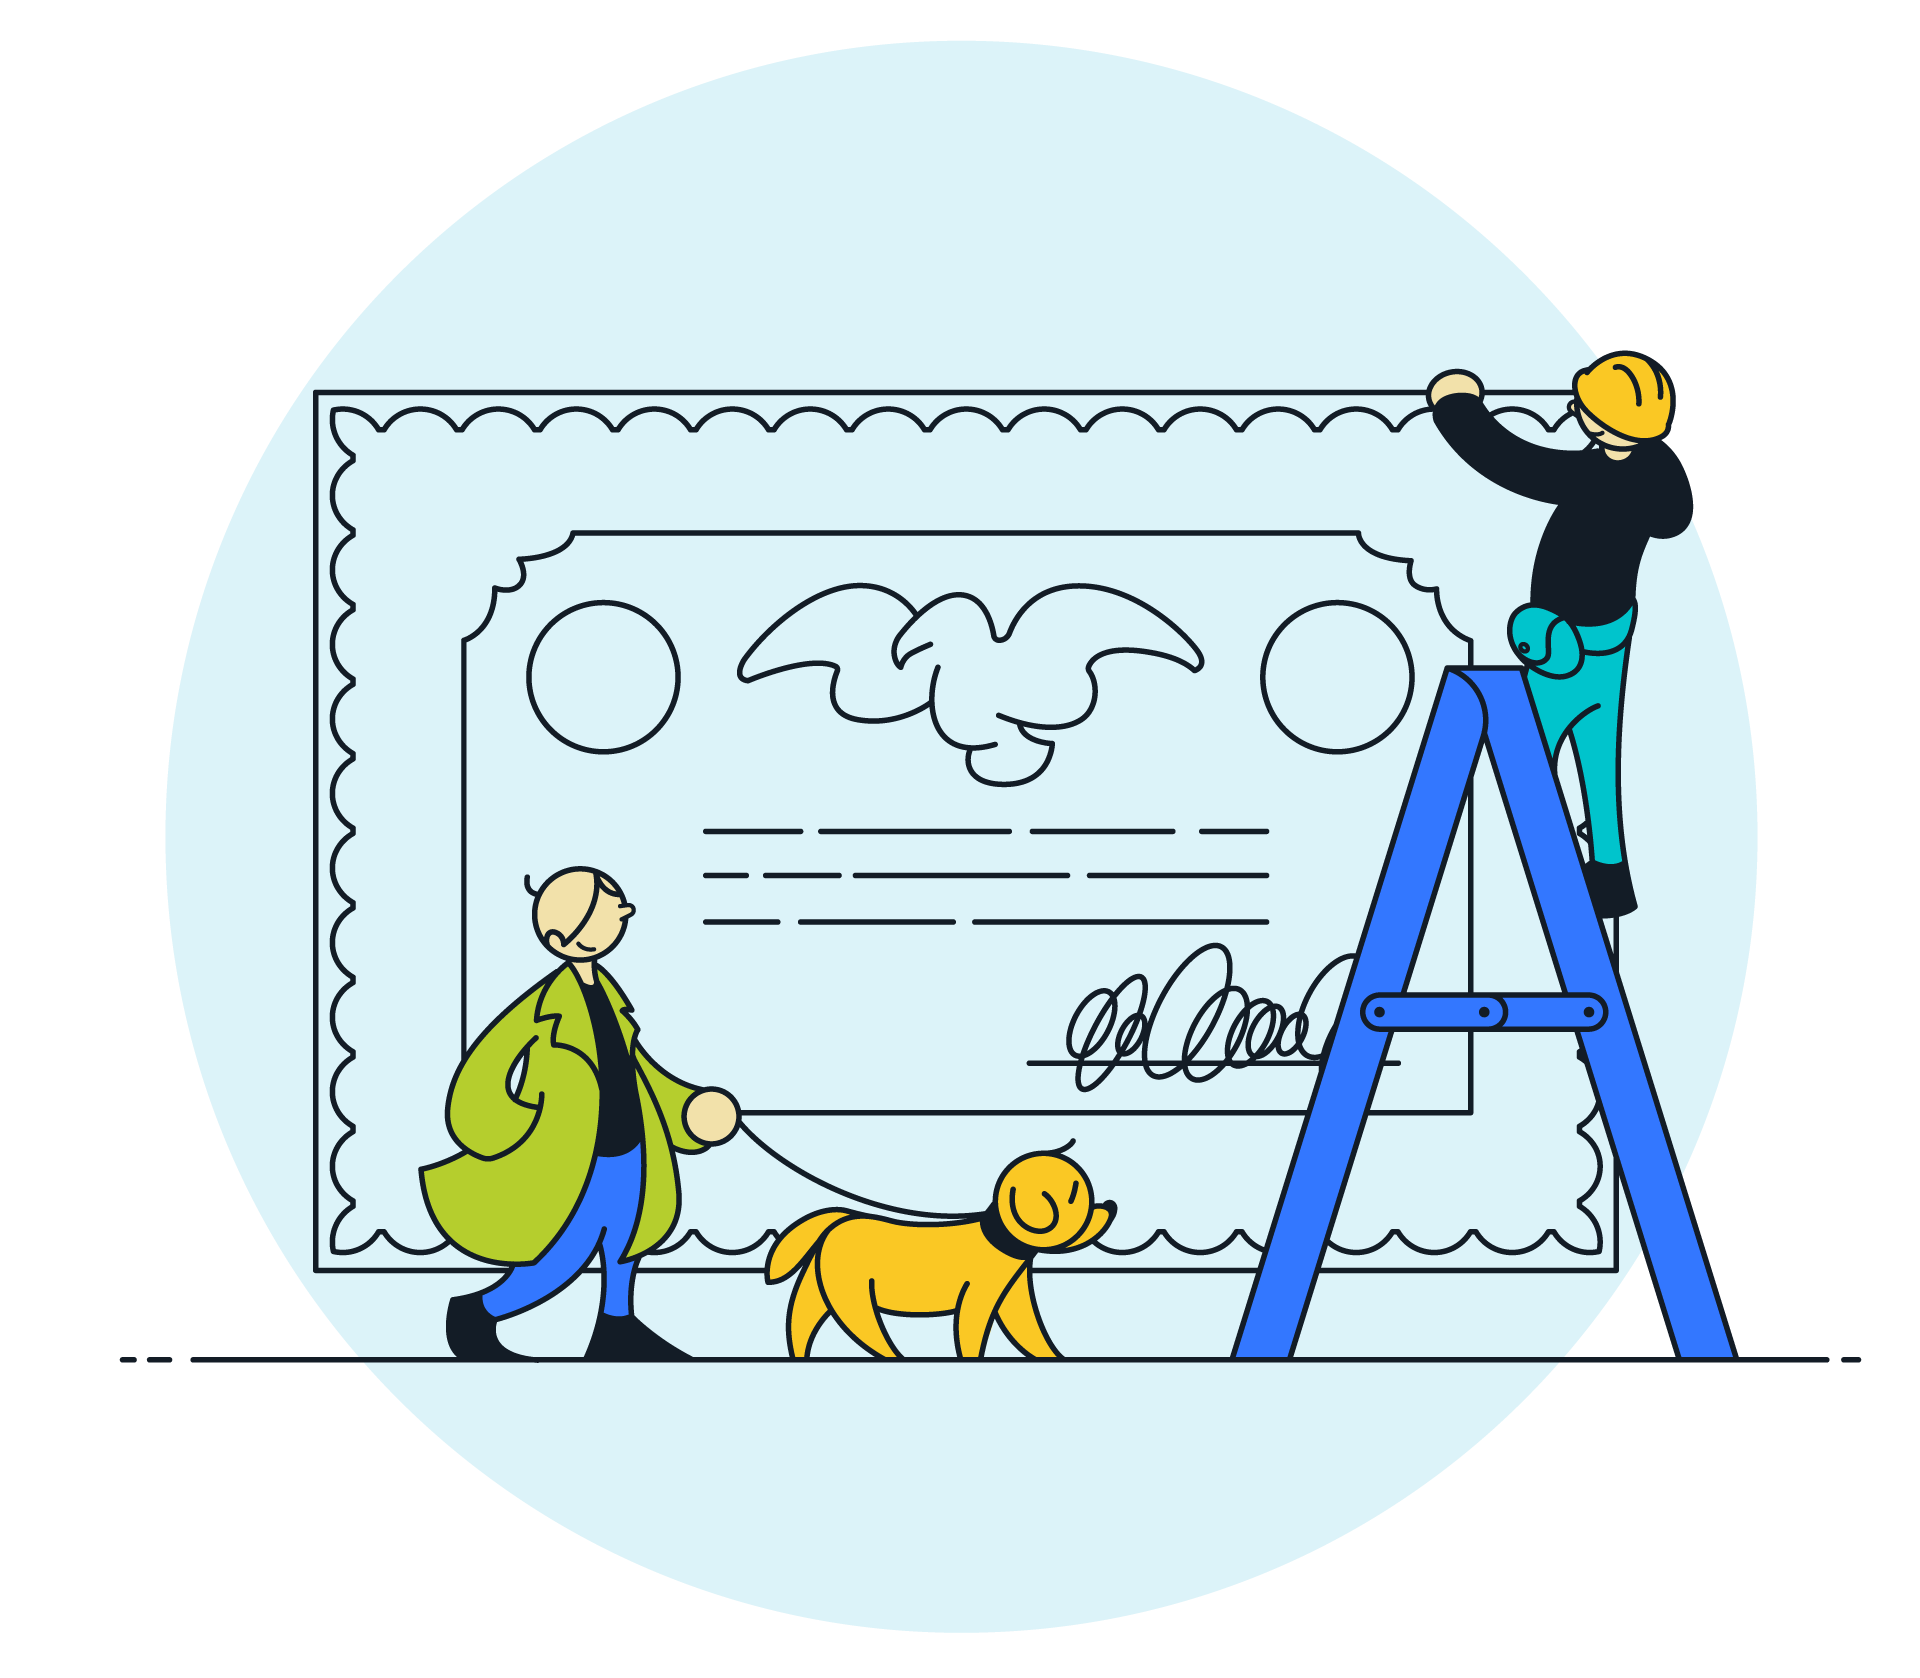 Creating a certificate